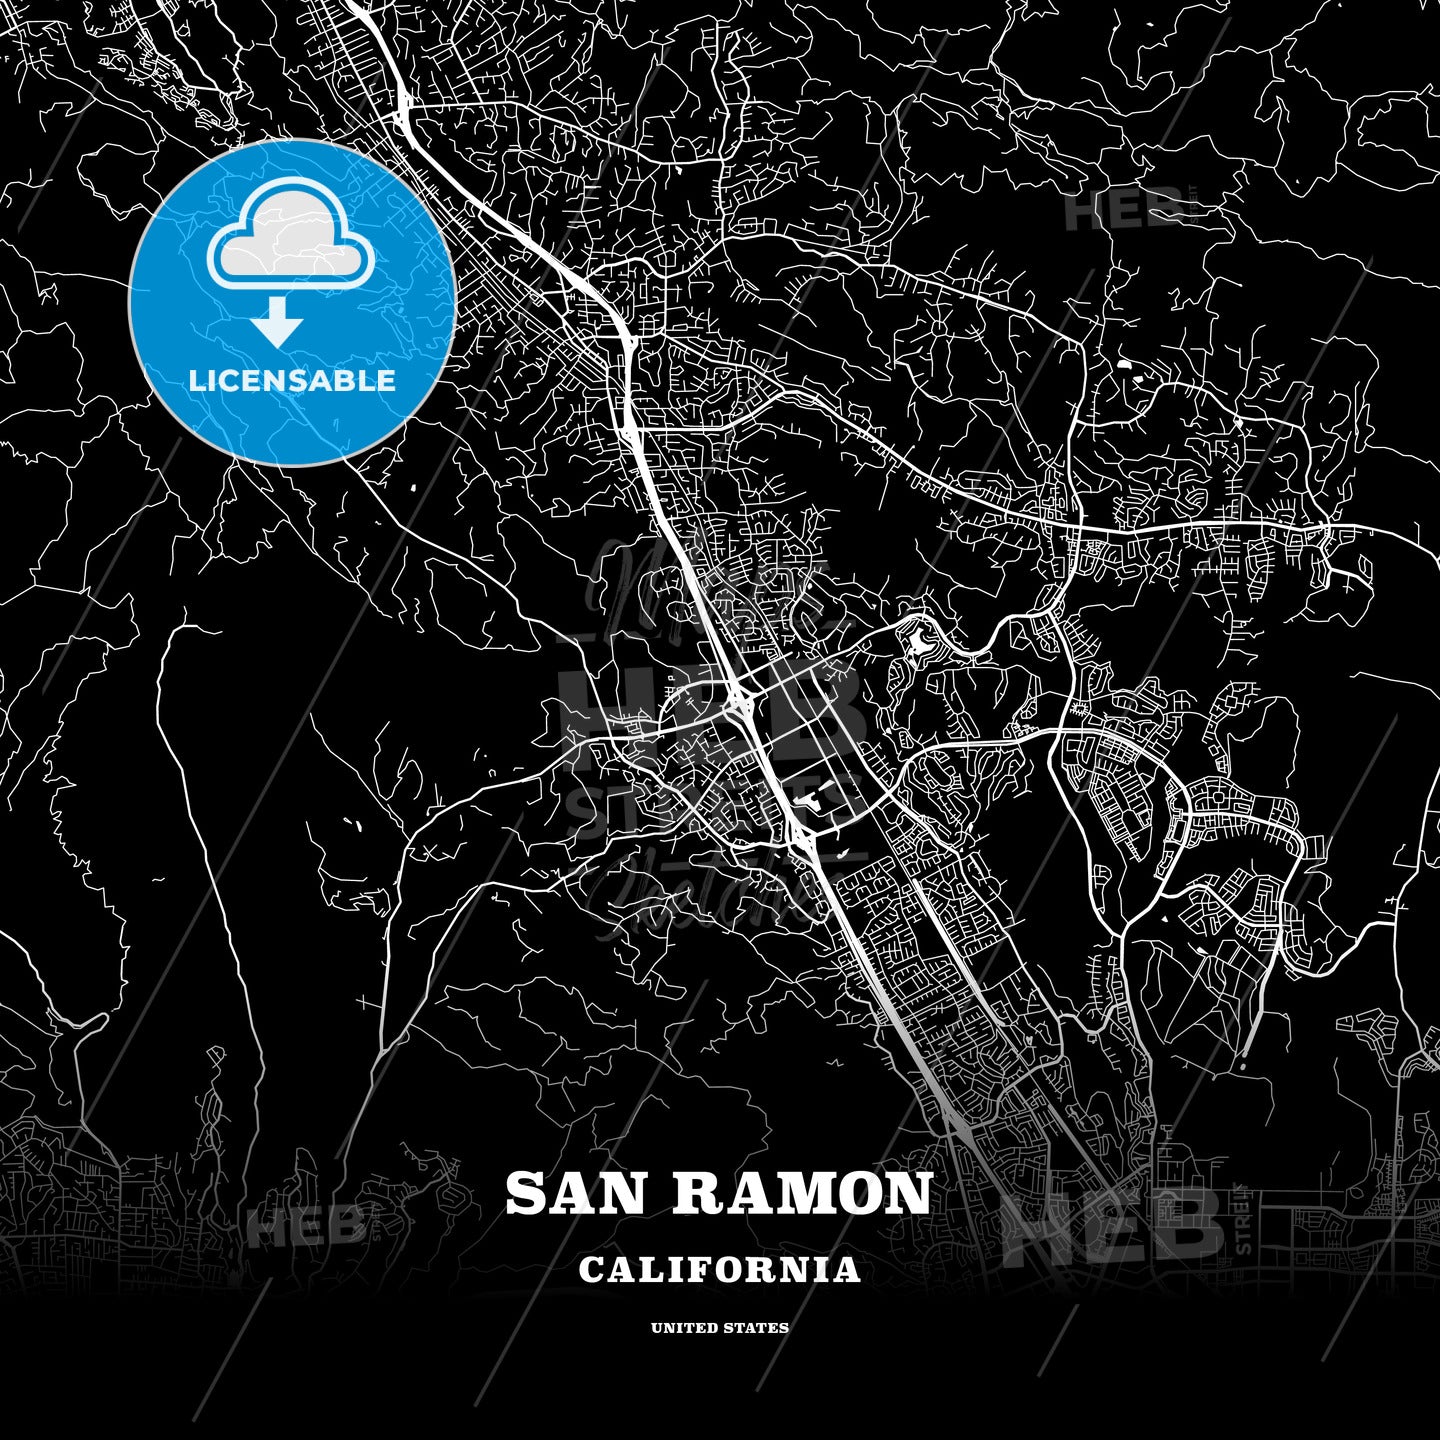 San Ramon, California, USA map